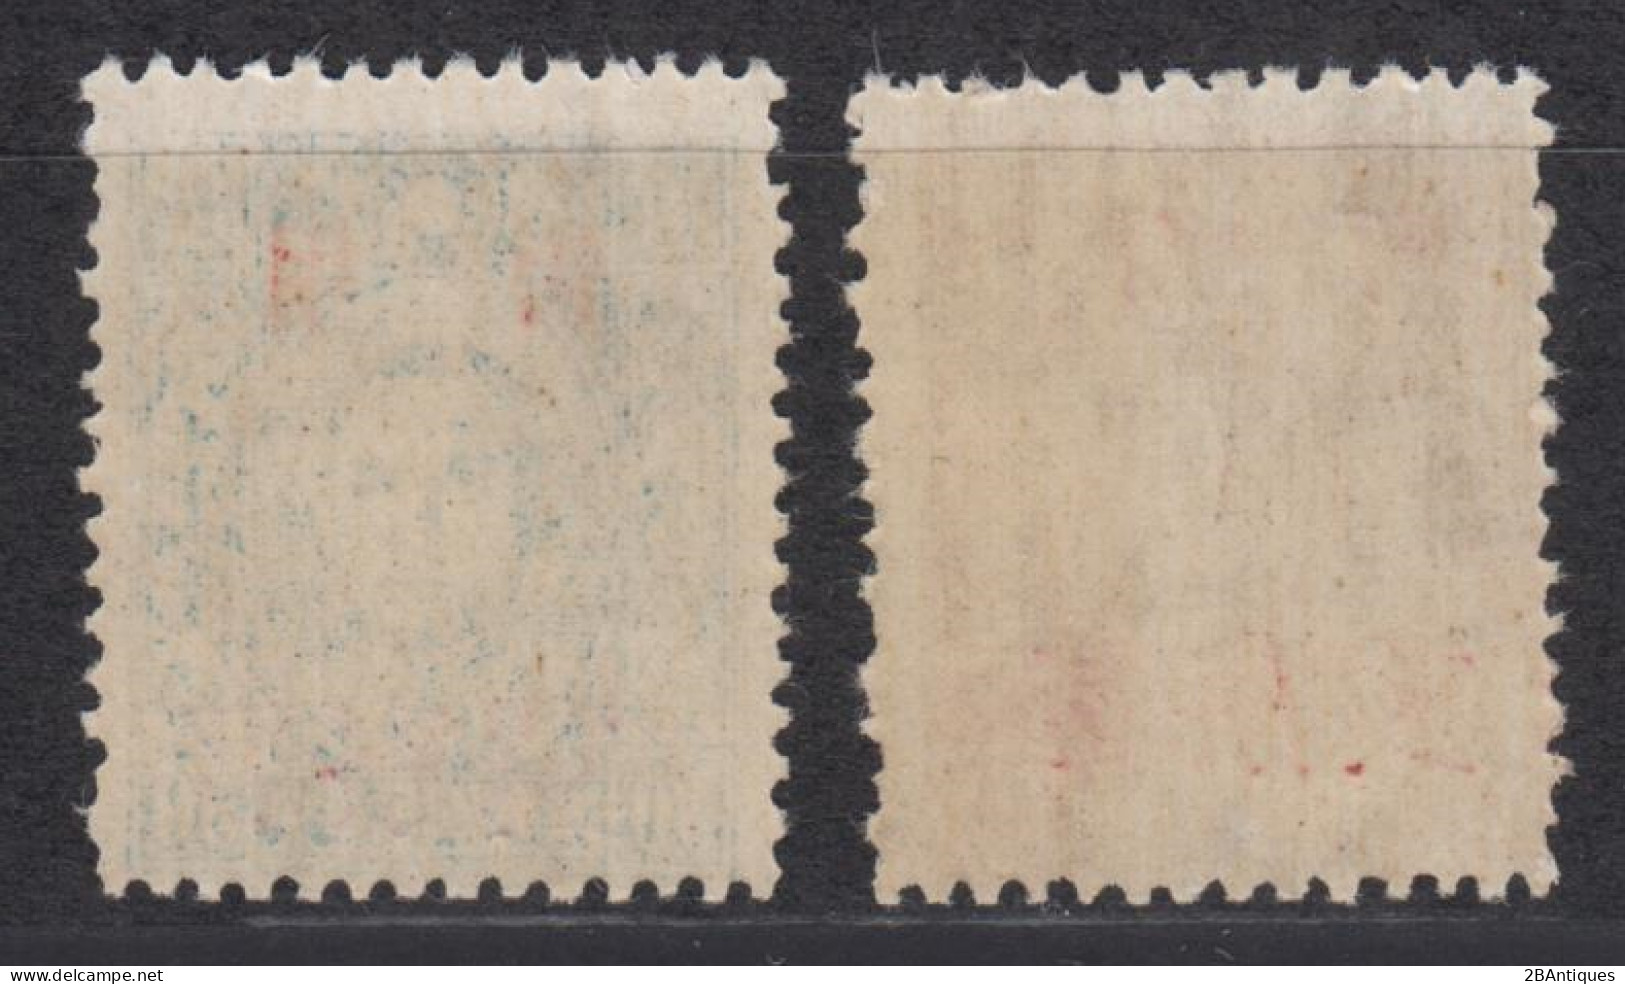 NORTH CHINA SHANXI-QAHAR-HEBEI 1945 - Inner Mongolia Stamps With Overprint "Ji Cha Jin" - Nordchina 1949-50